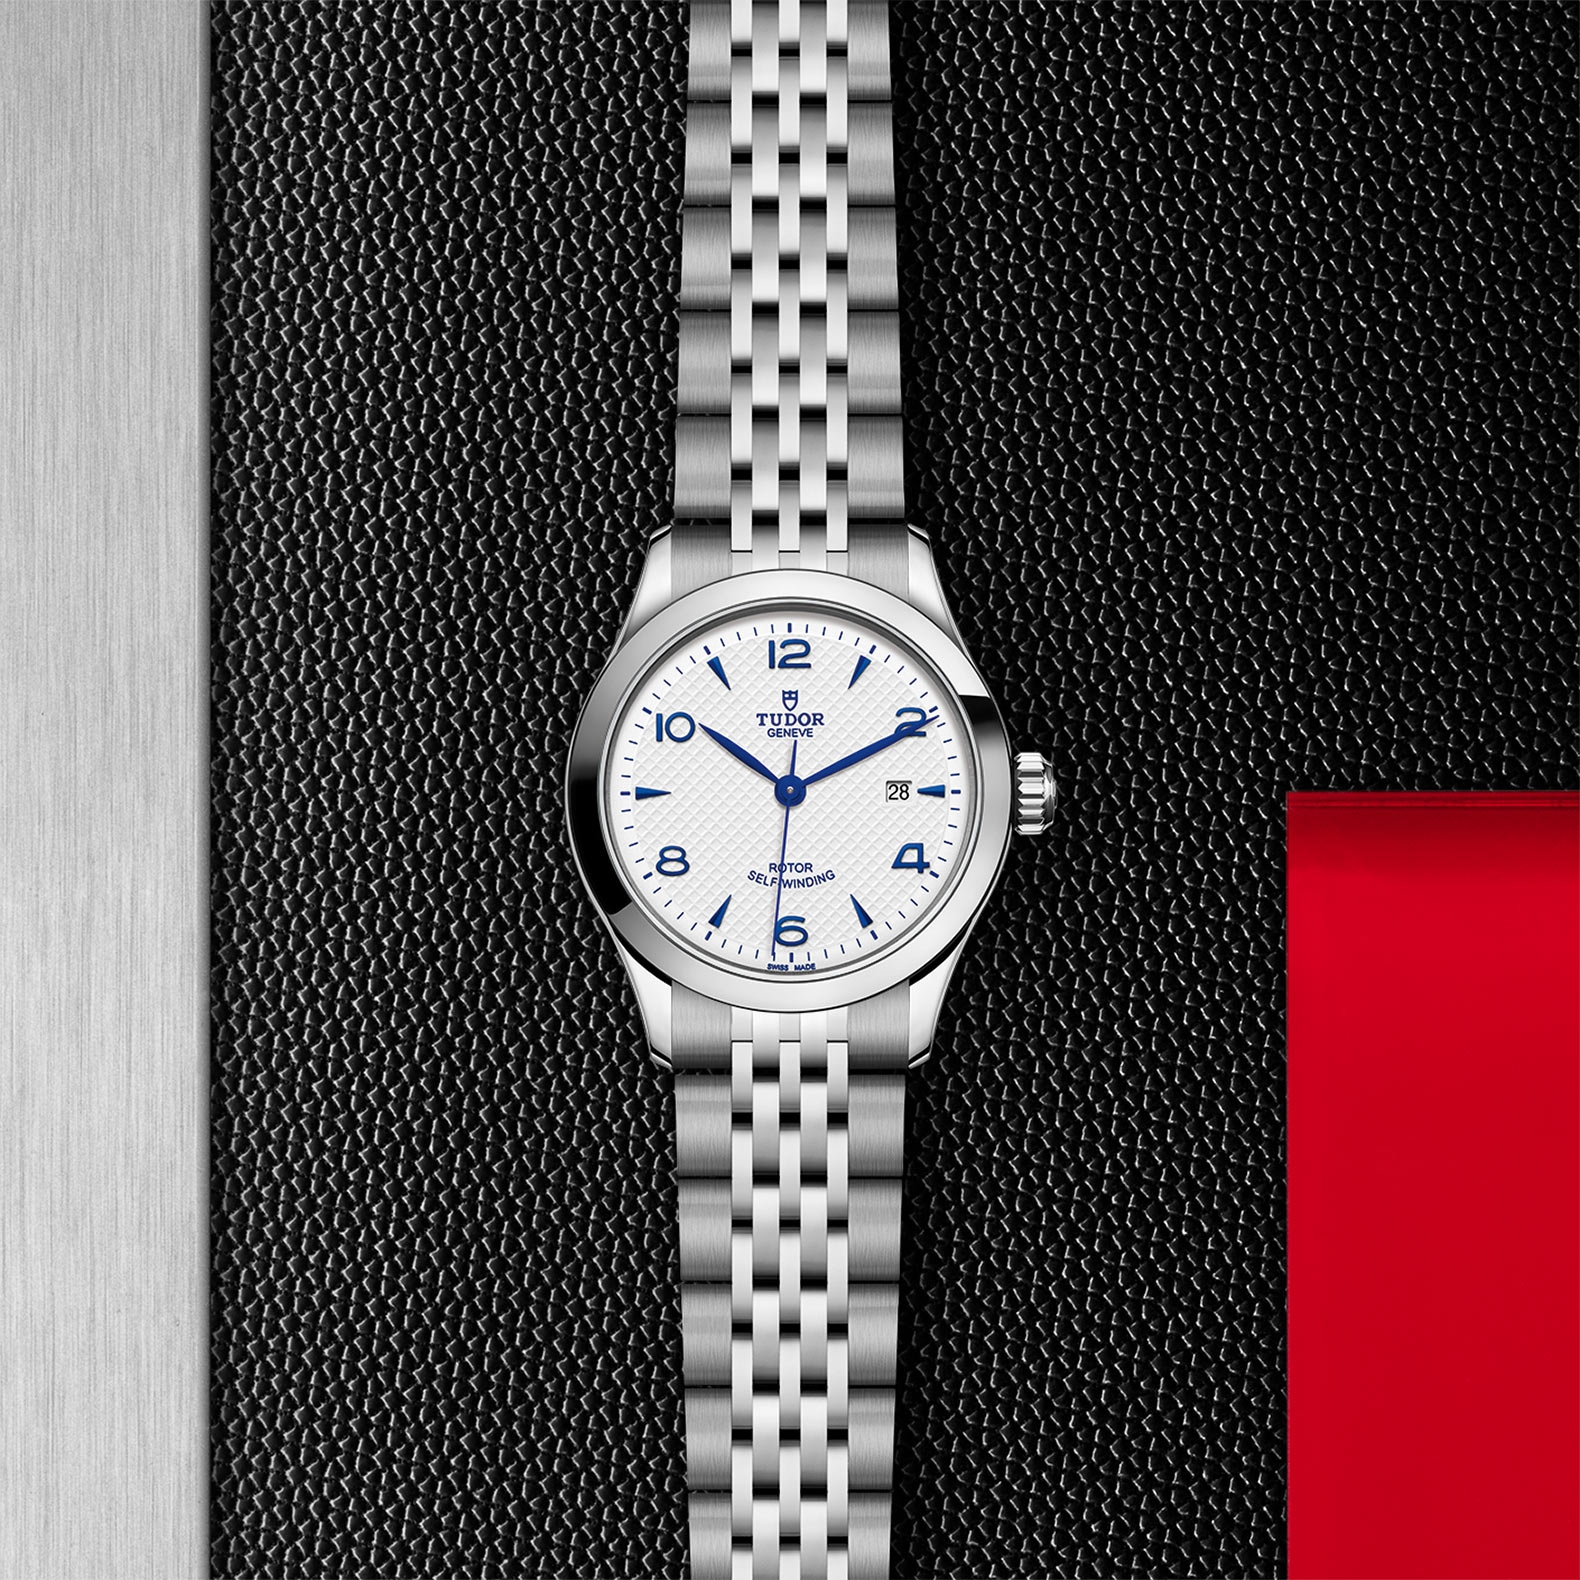 Tudor 1926 - M91350-0005 | Europe Watch Company